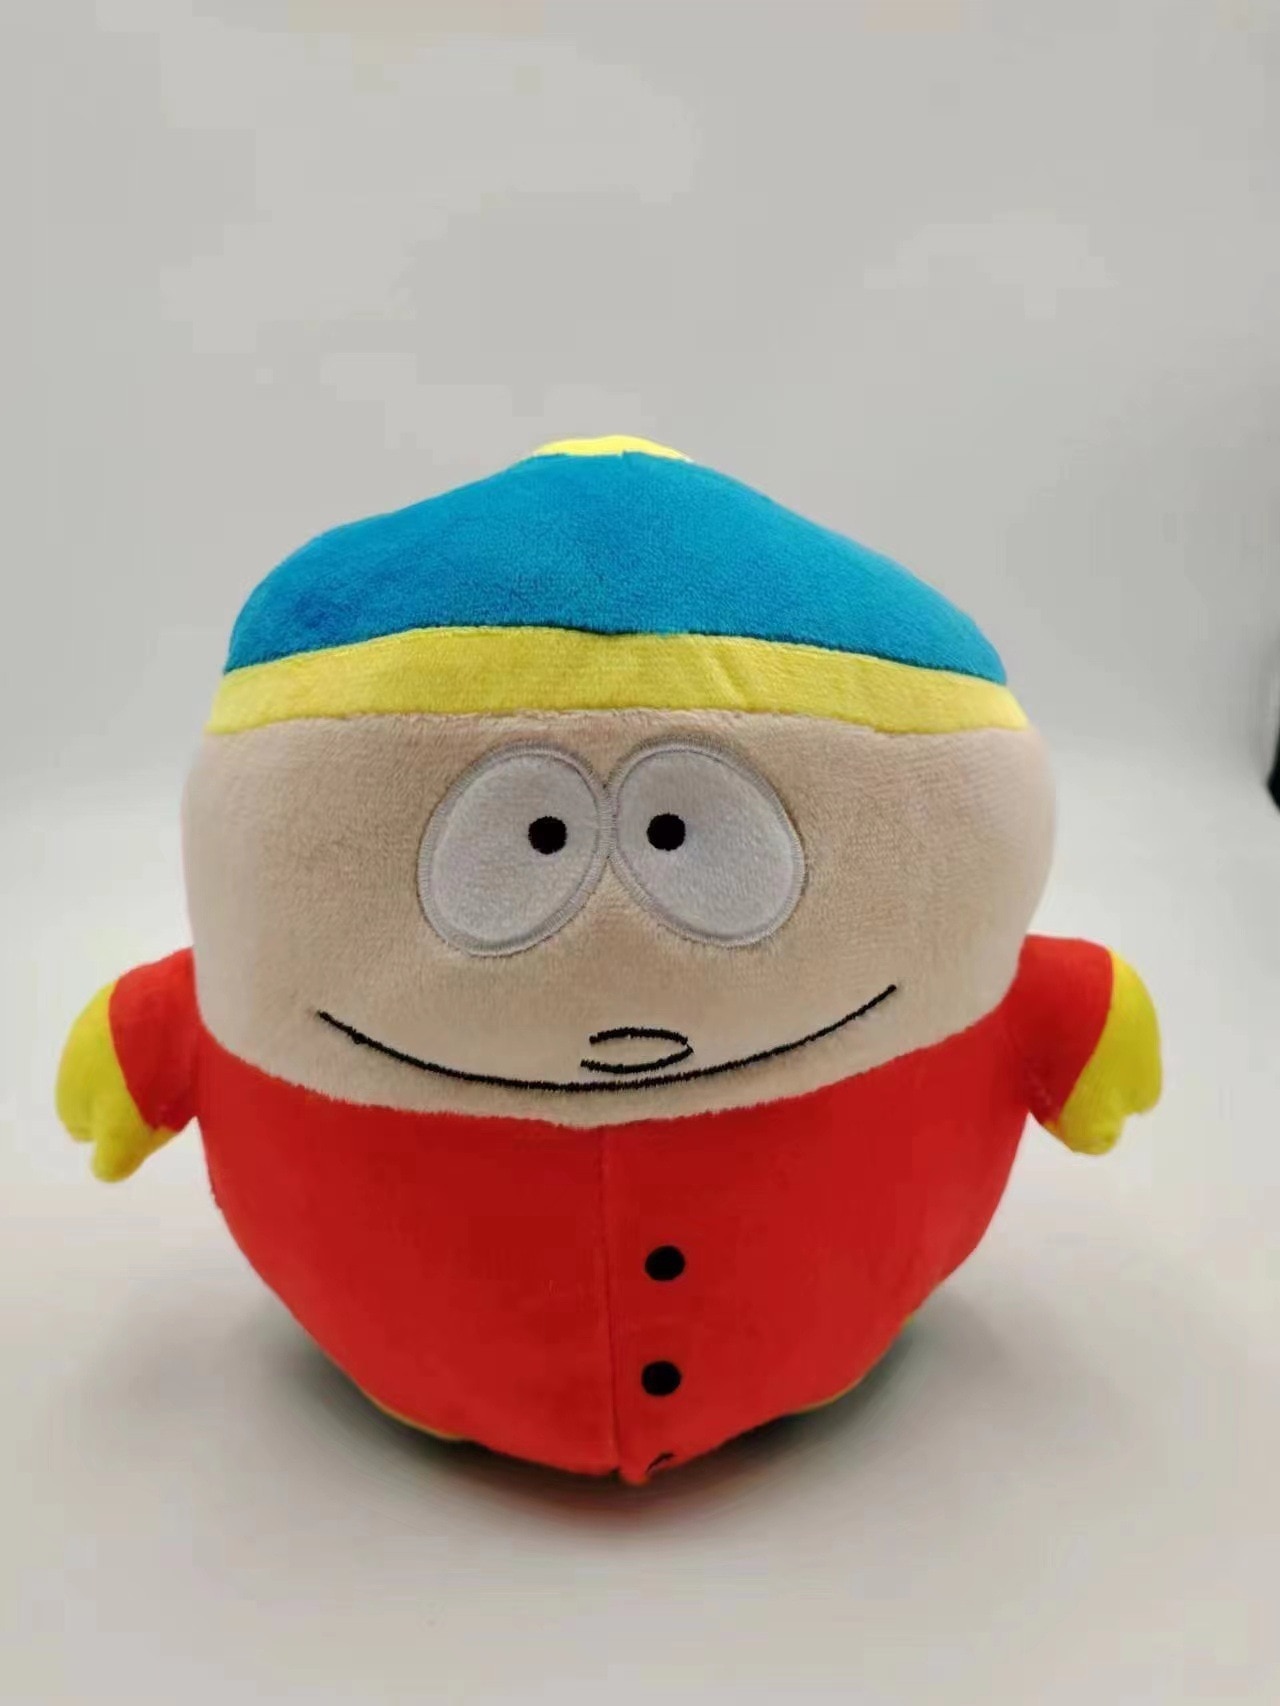 New 18cm Southpark Plush Toys Cartoon Doll Kyle Broflovski Eric cartman Park Band Plush Grab Doll 5 - South Park Plush